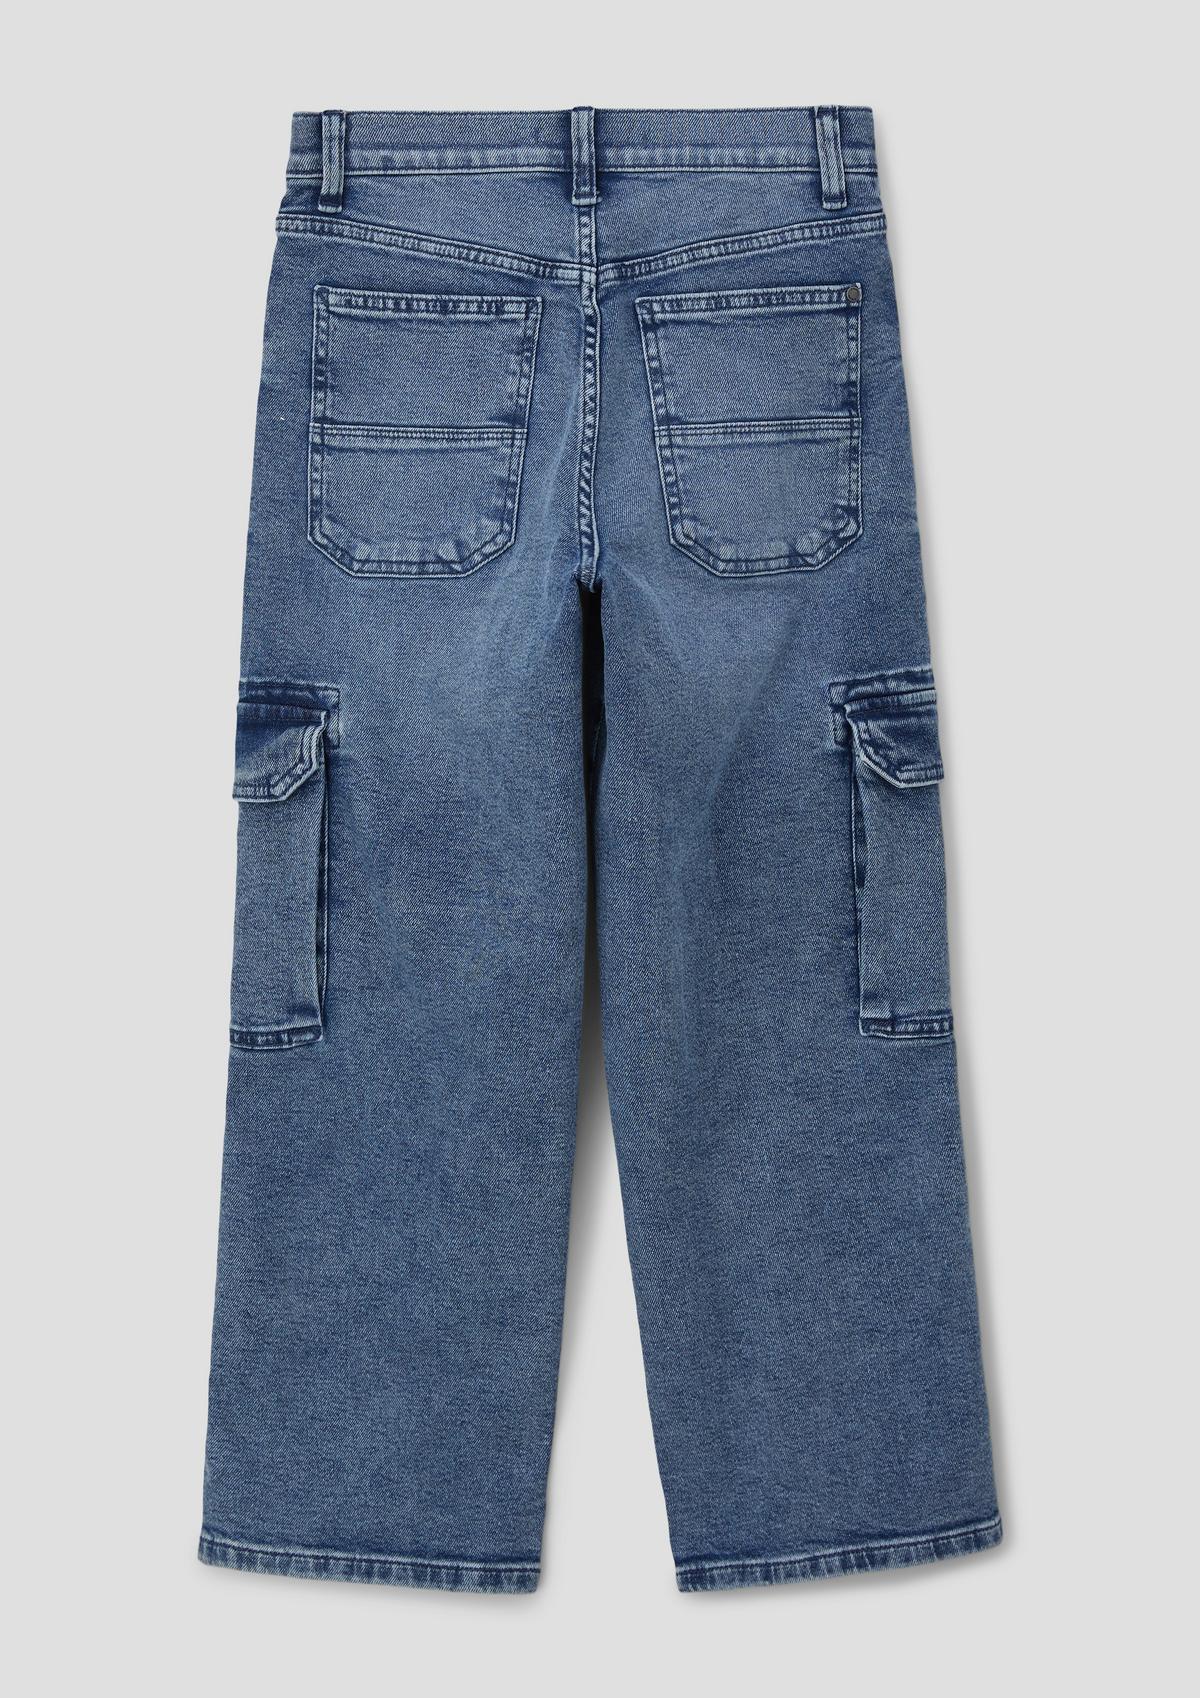 s.Oliver Jeans / Regular fit / Mid rise / Slim leg